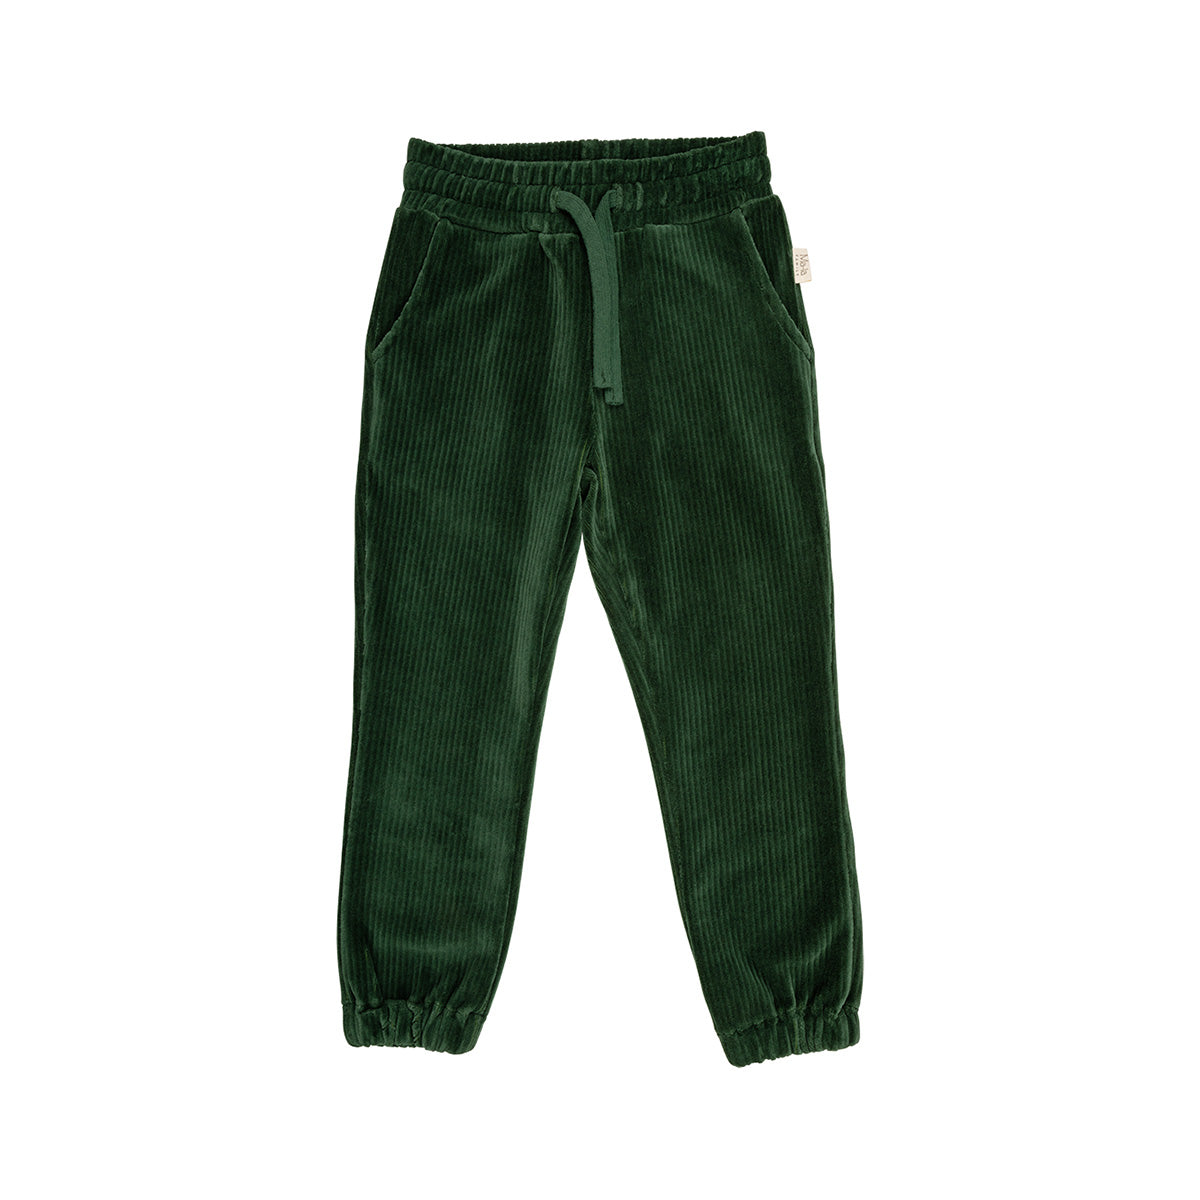 Merri Trousers, dark green